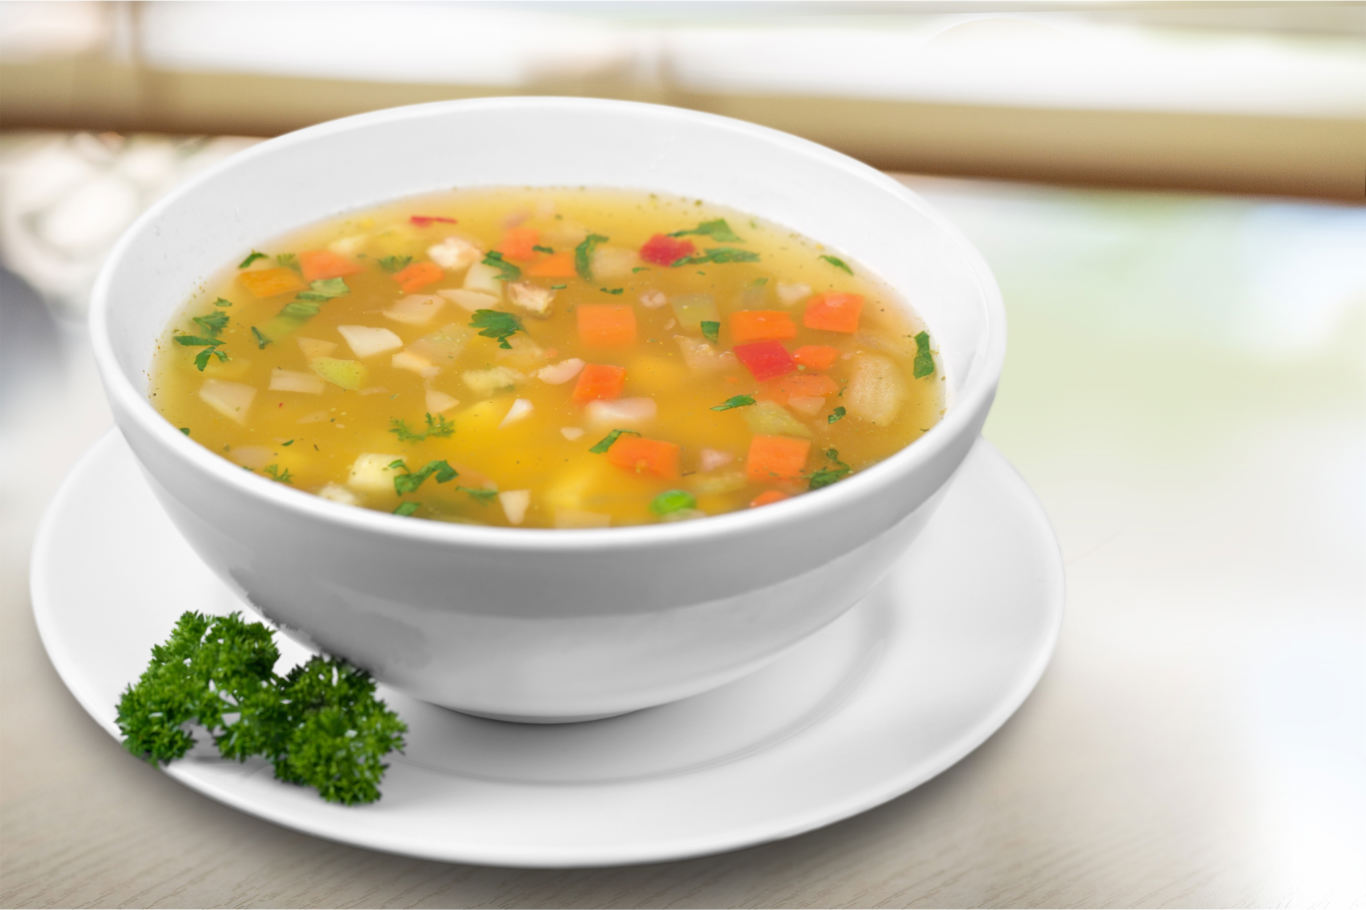 Soups.jpg